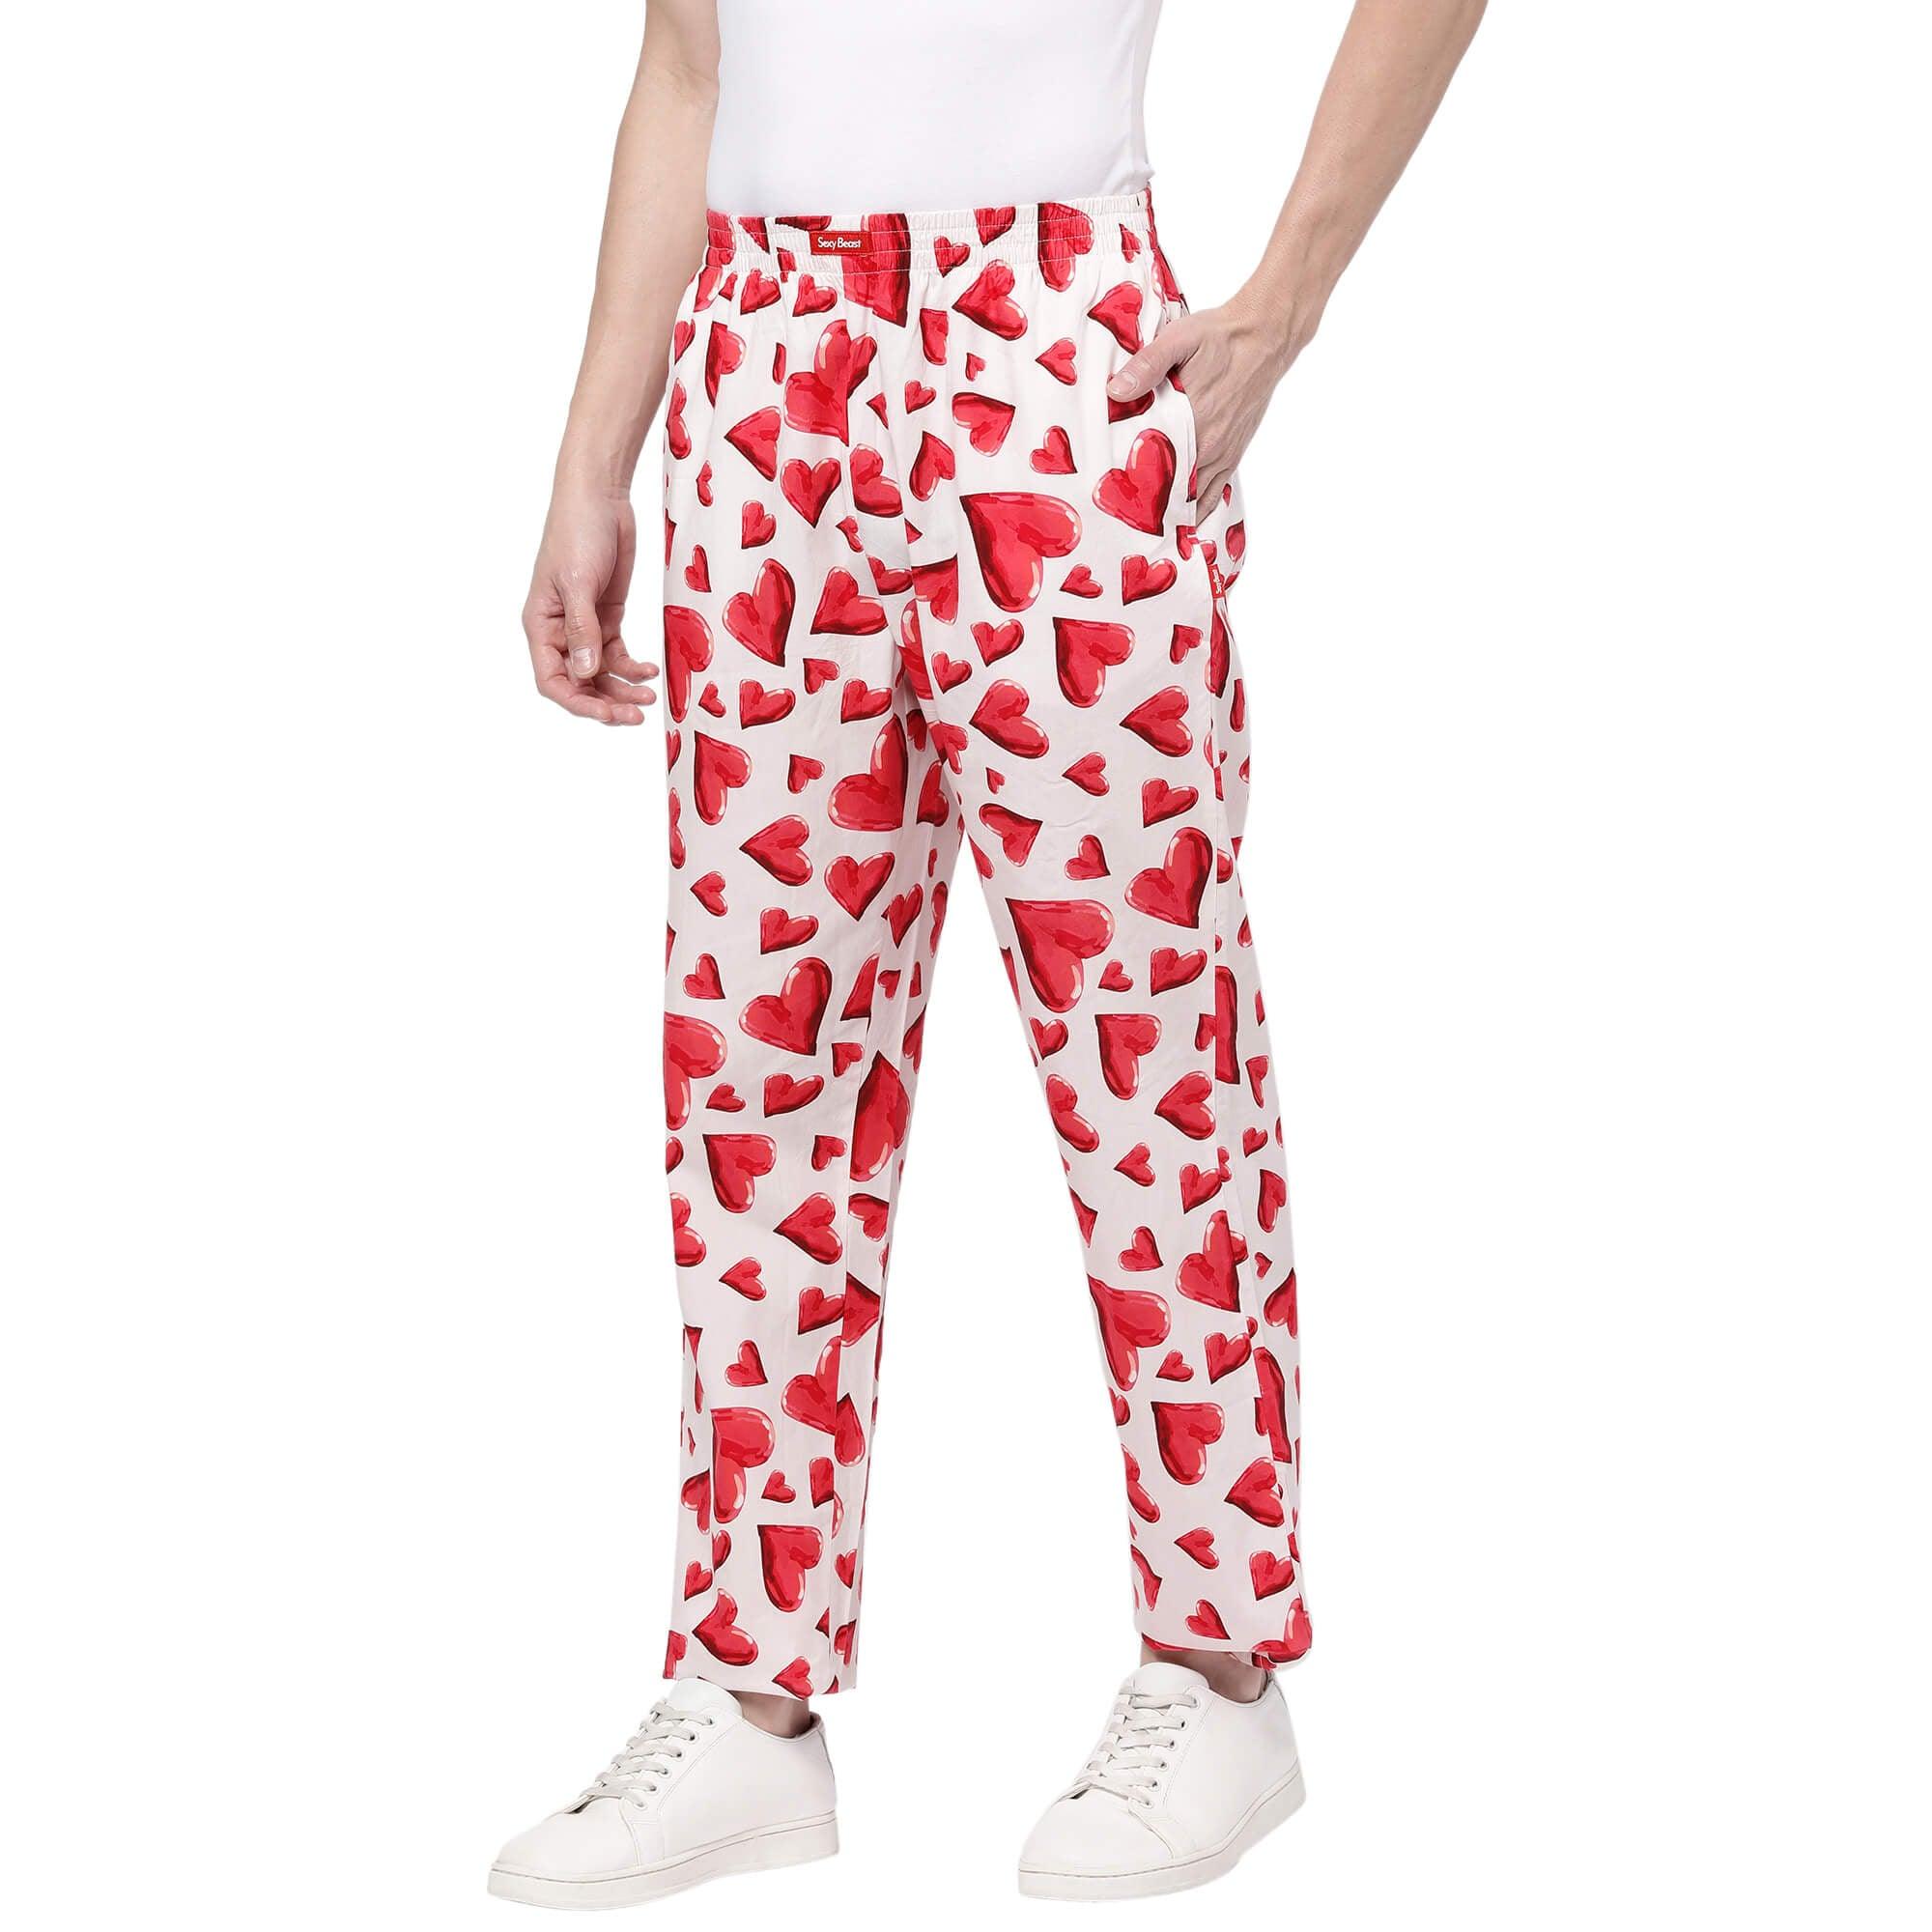 Valentine Hearts Printed Pyjamas For Men Online